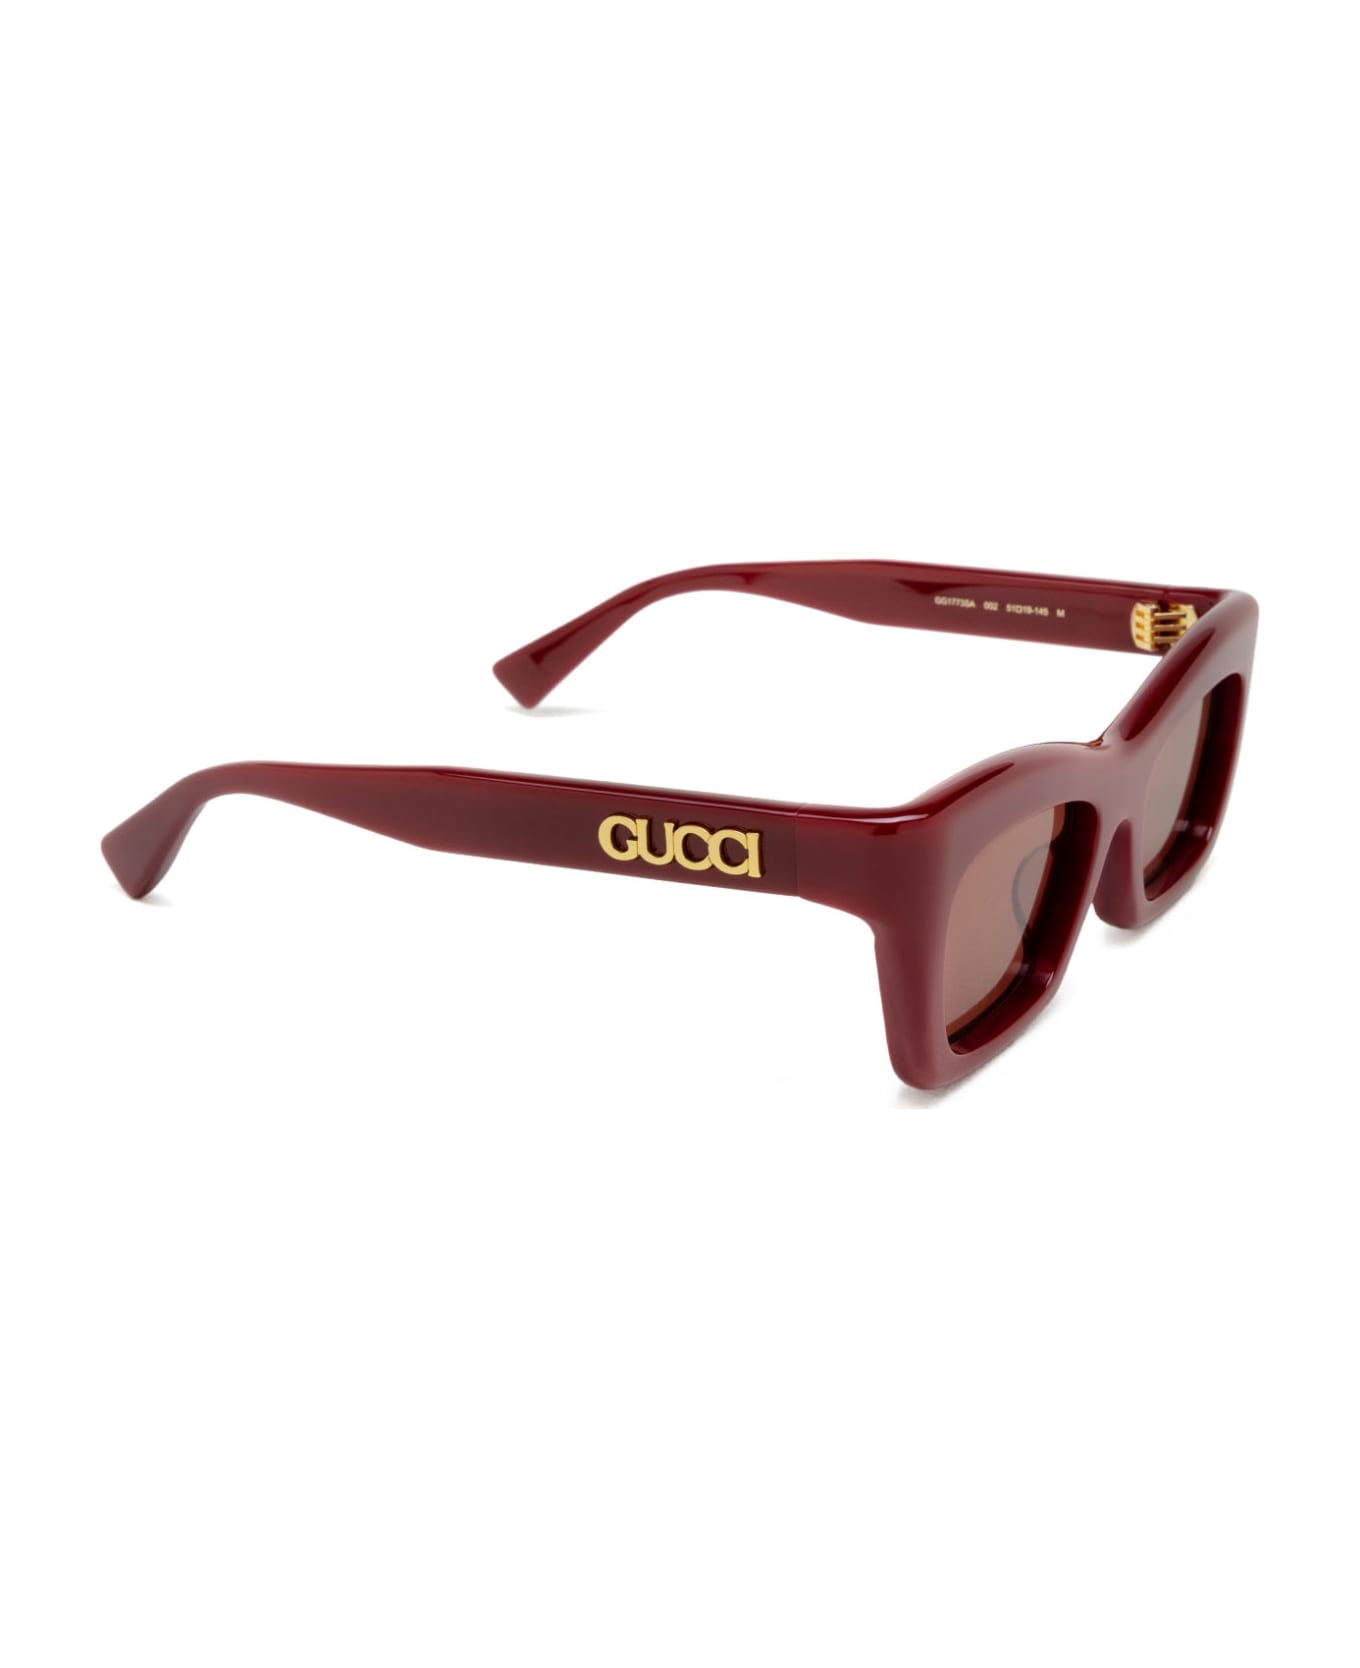 Gucci Eyewear Gg1773sa Brugundy Sunglasses - Brugundy